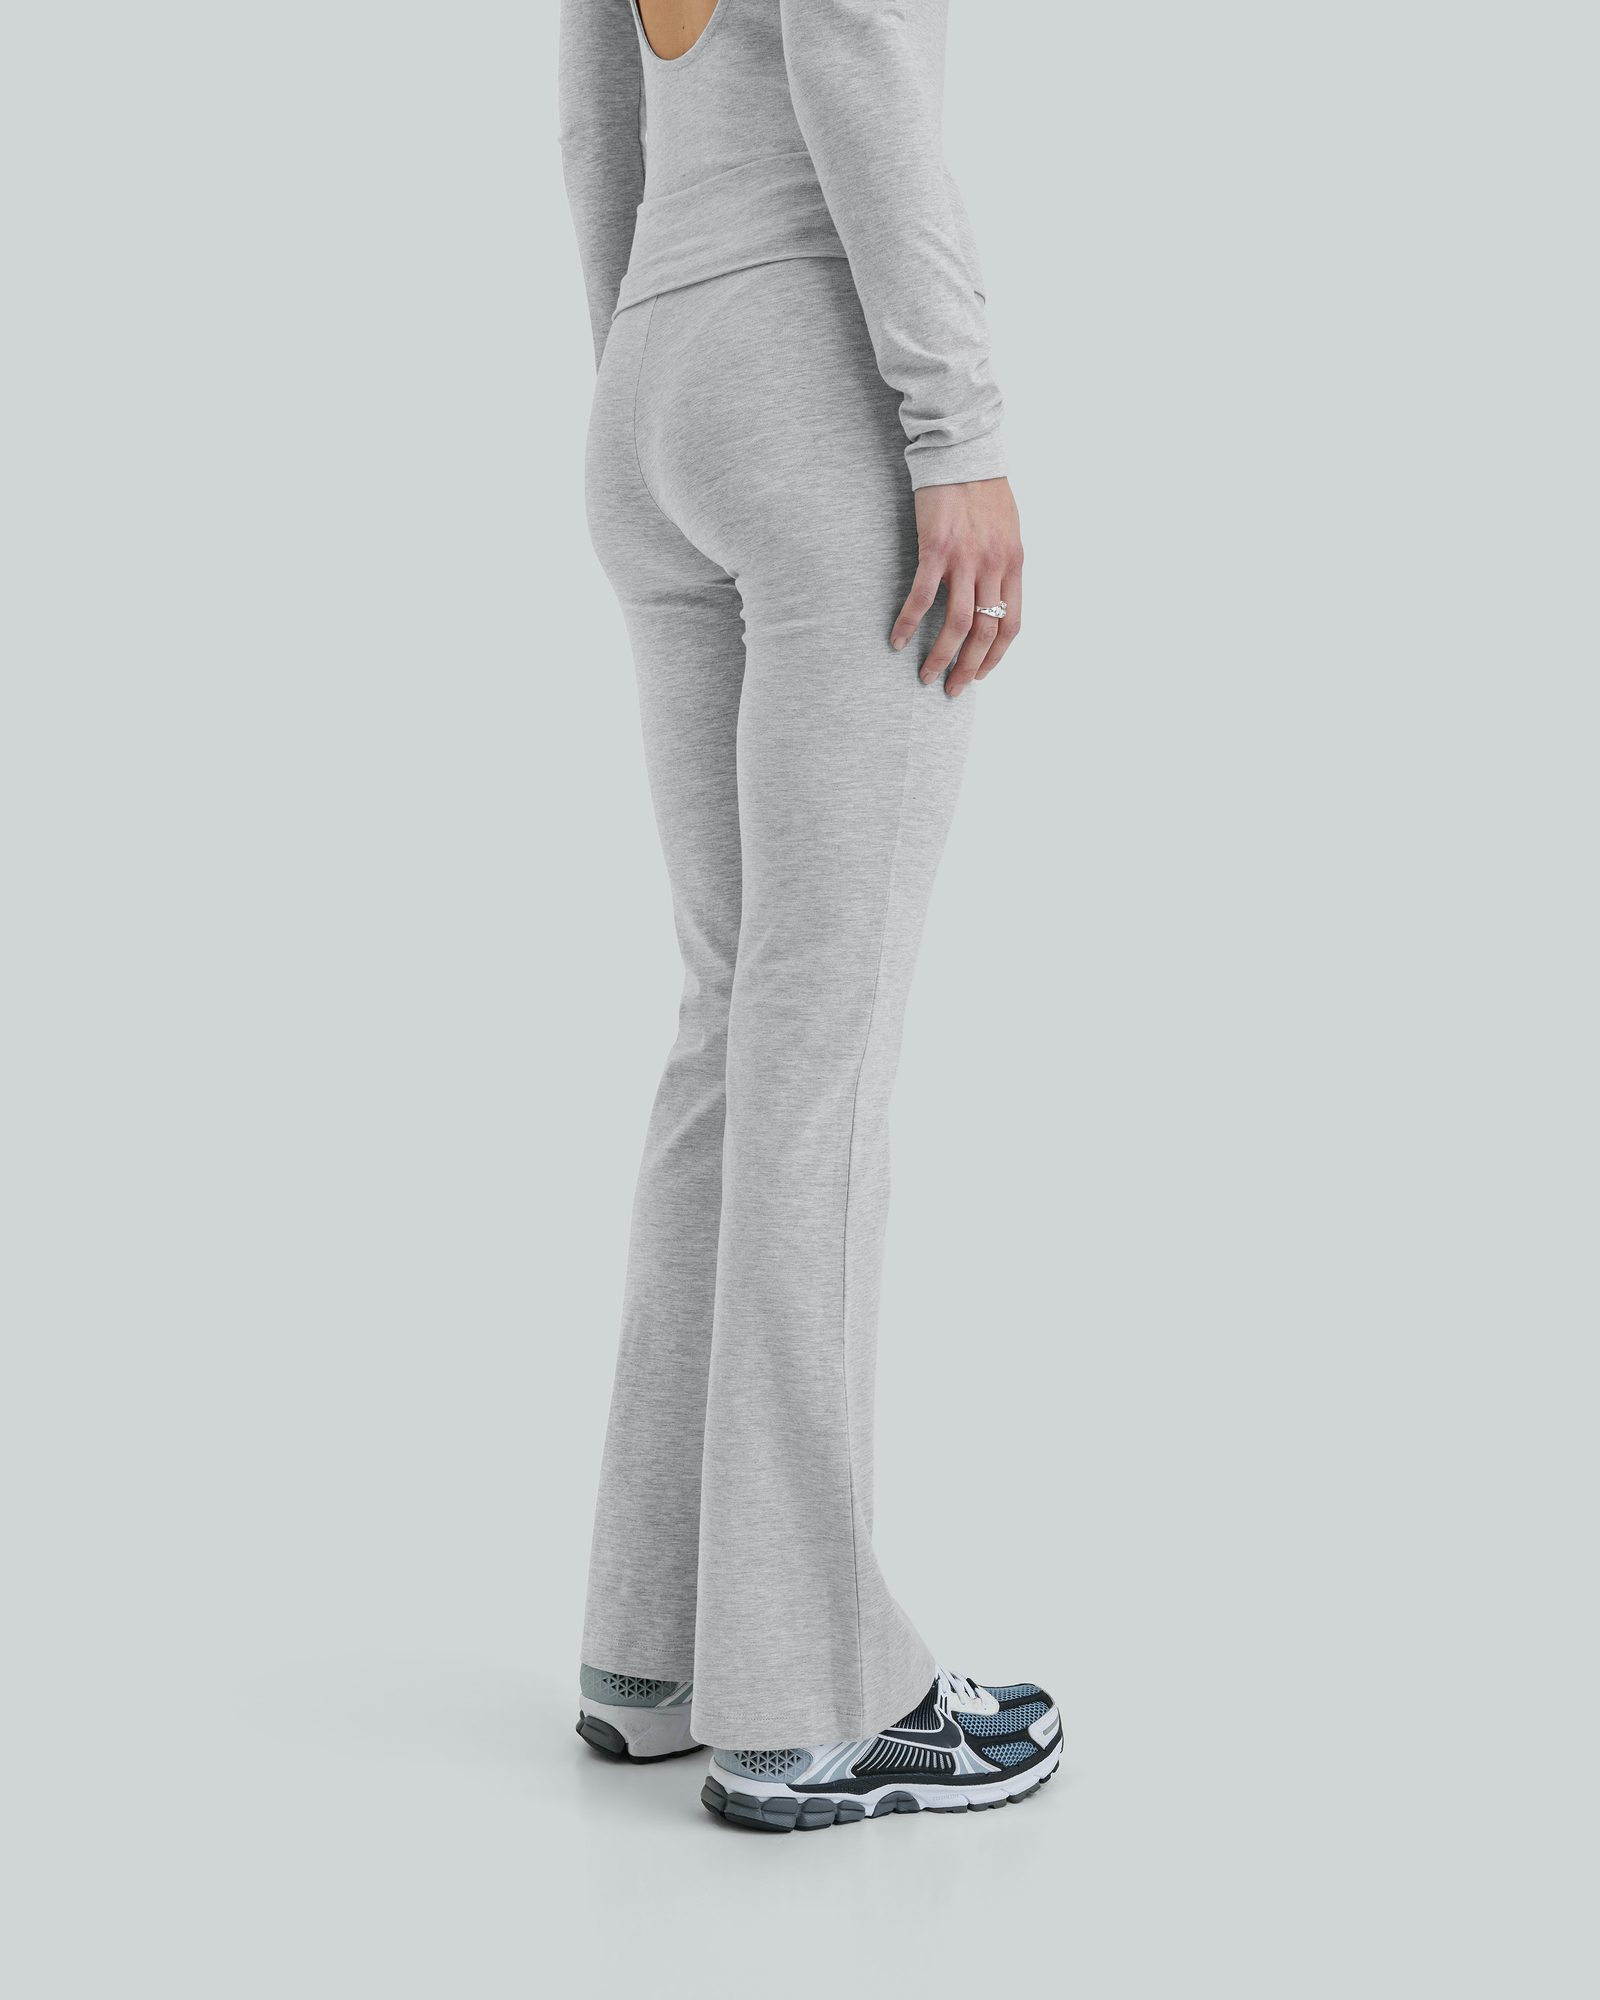 PHISOCKAT Women's Yoga Pants with Pockets, High Waist Tummy Gray Size -  beyond exchange